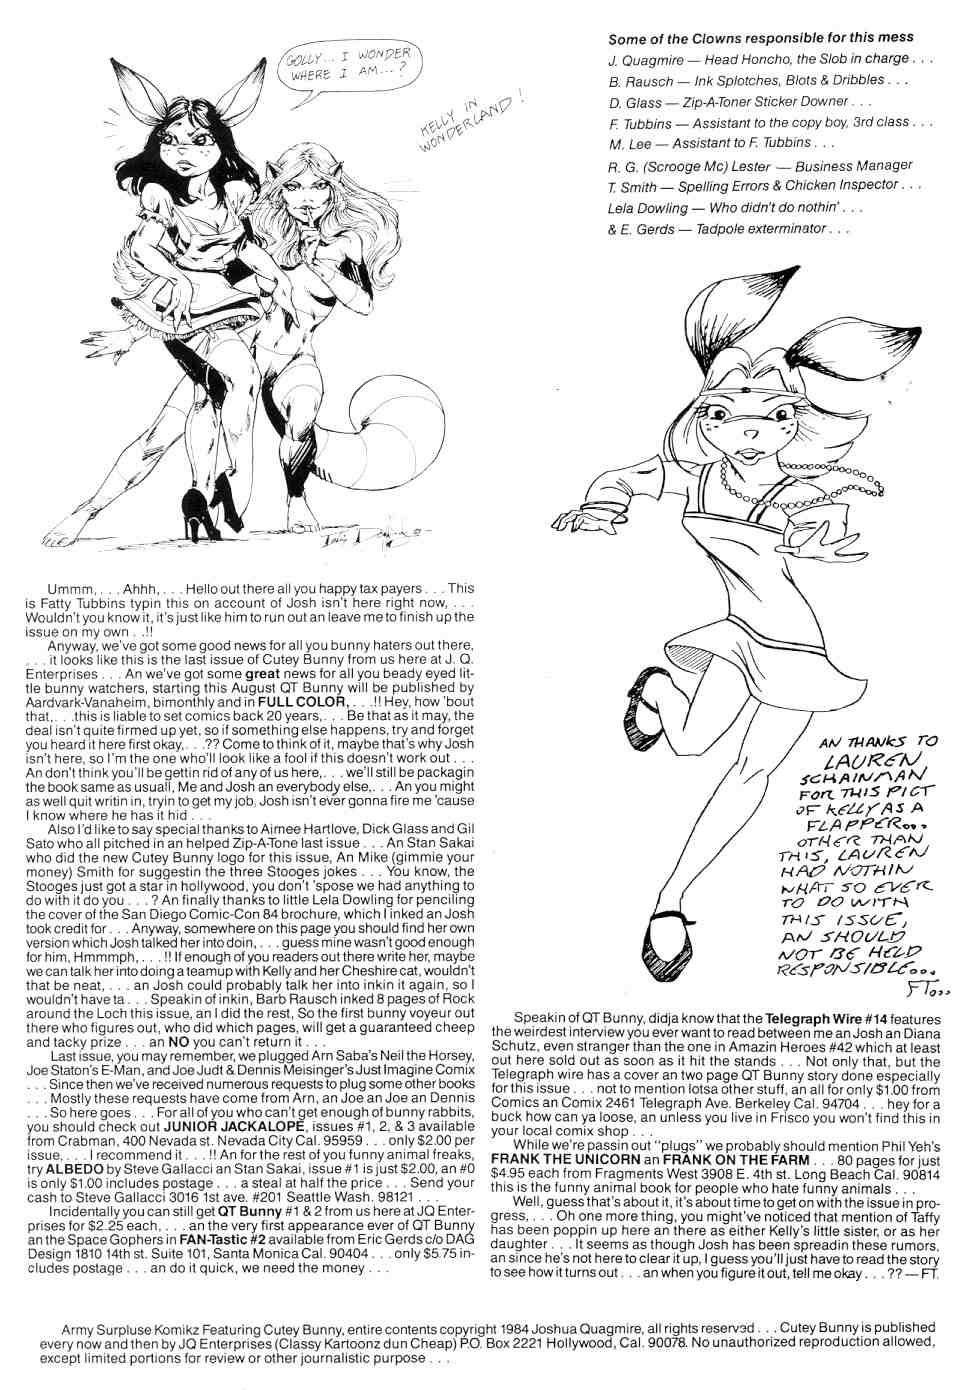 Read online Army  Surplus Komikz Featuring: Cutey Bunny comic -  Issue #3 - 2